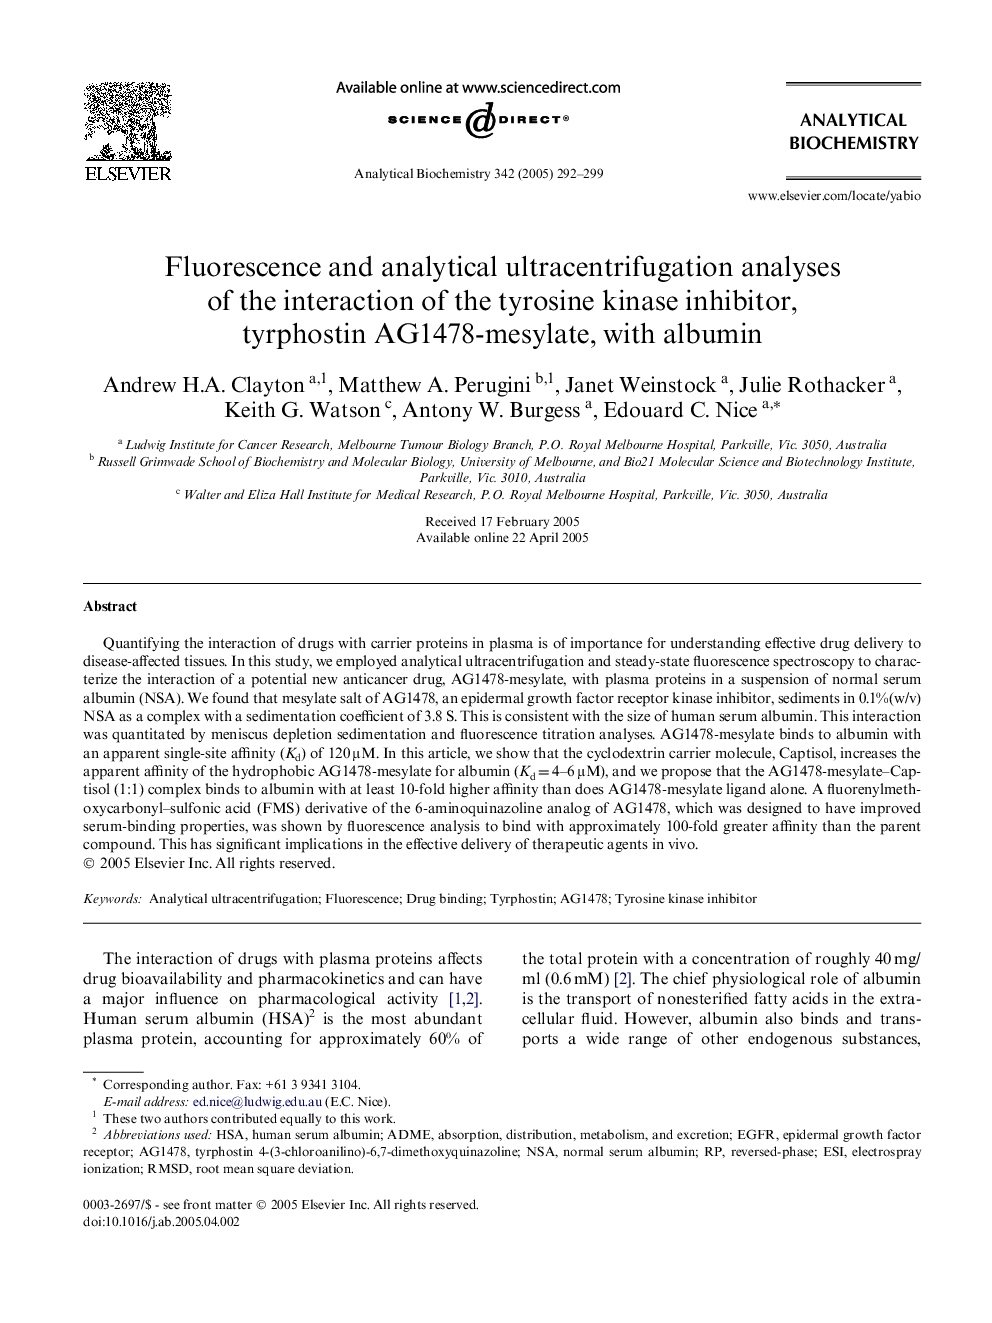 Fluorescence and analytical ultracentrifugation analyses of the interaction of the tyrosine kinase inhibitor, tyrphostin AG1478-mesylate, with albumin